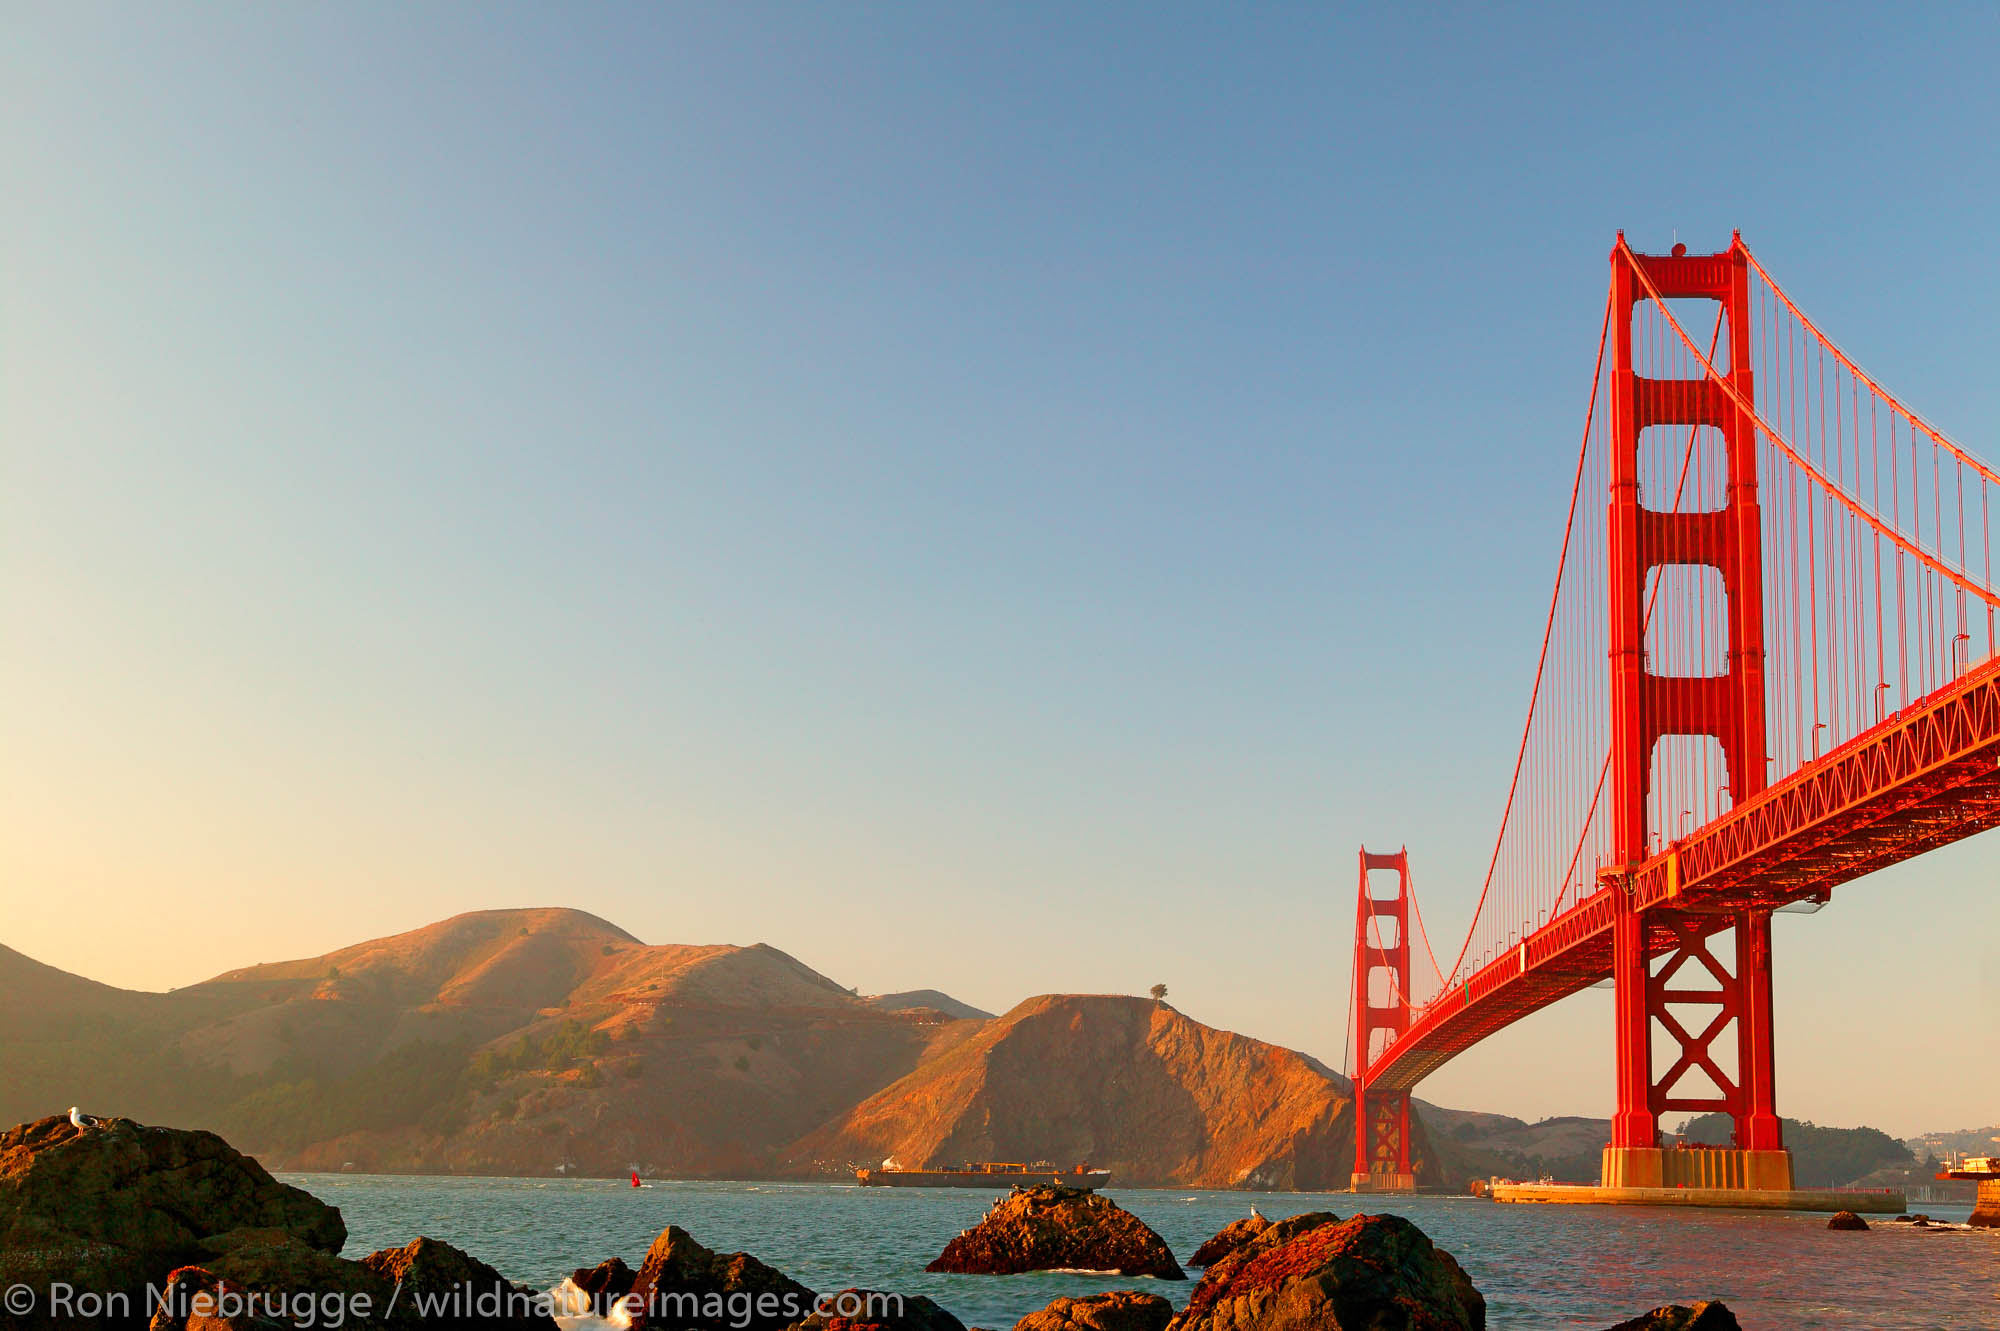 The Golden Gate Bridge in the evening from the Presidio, San Francisco, California.